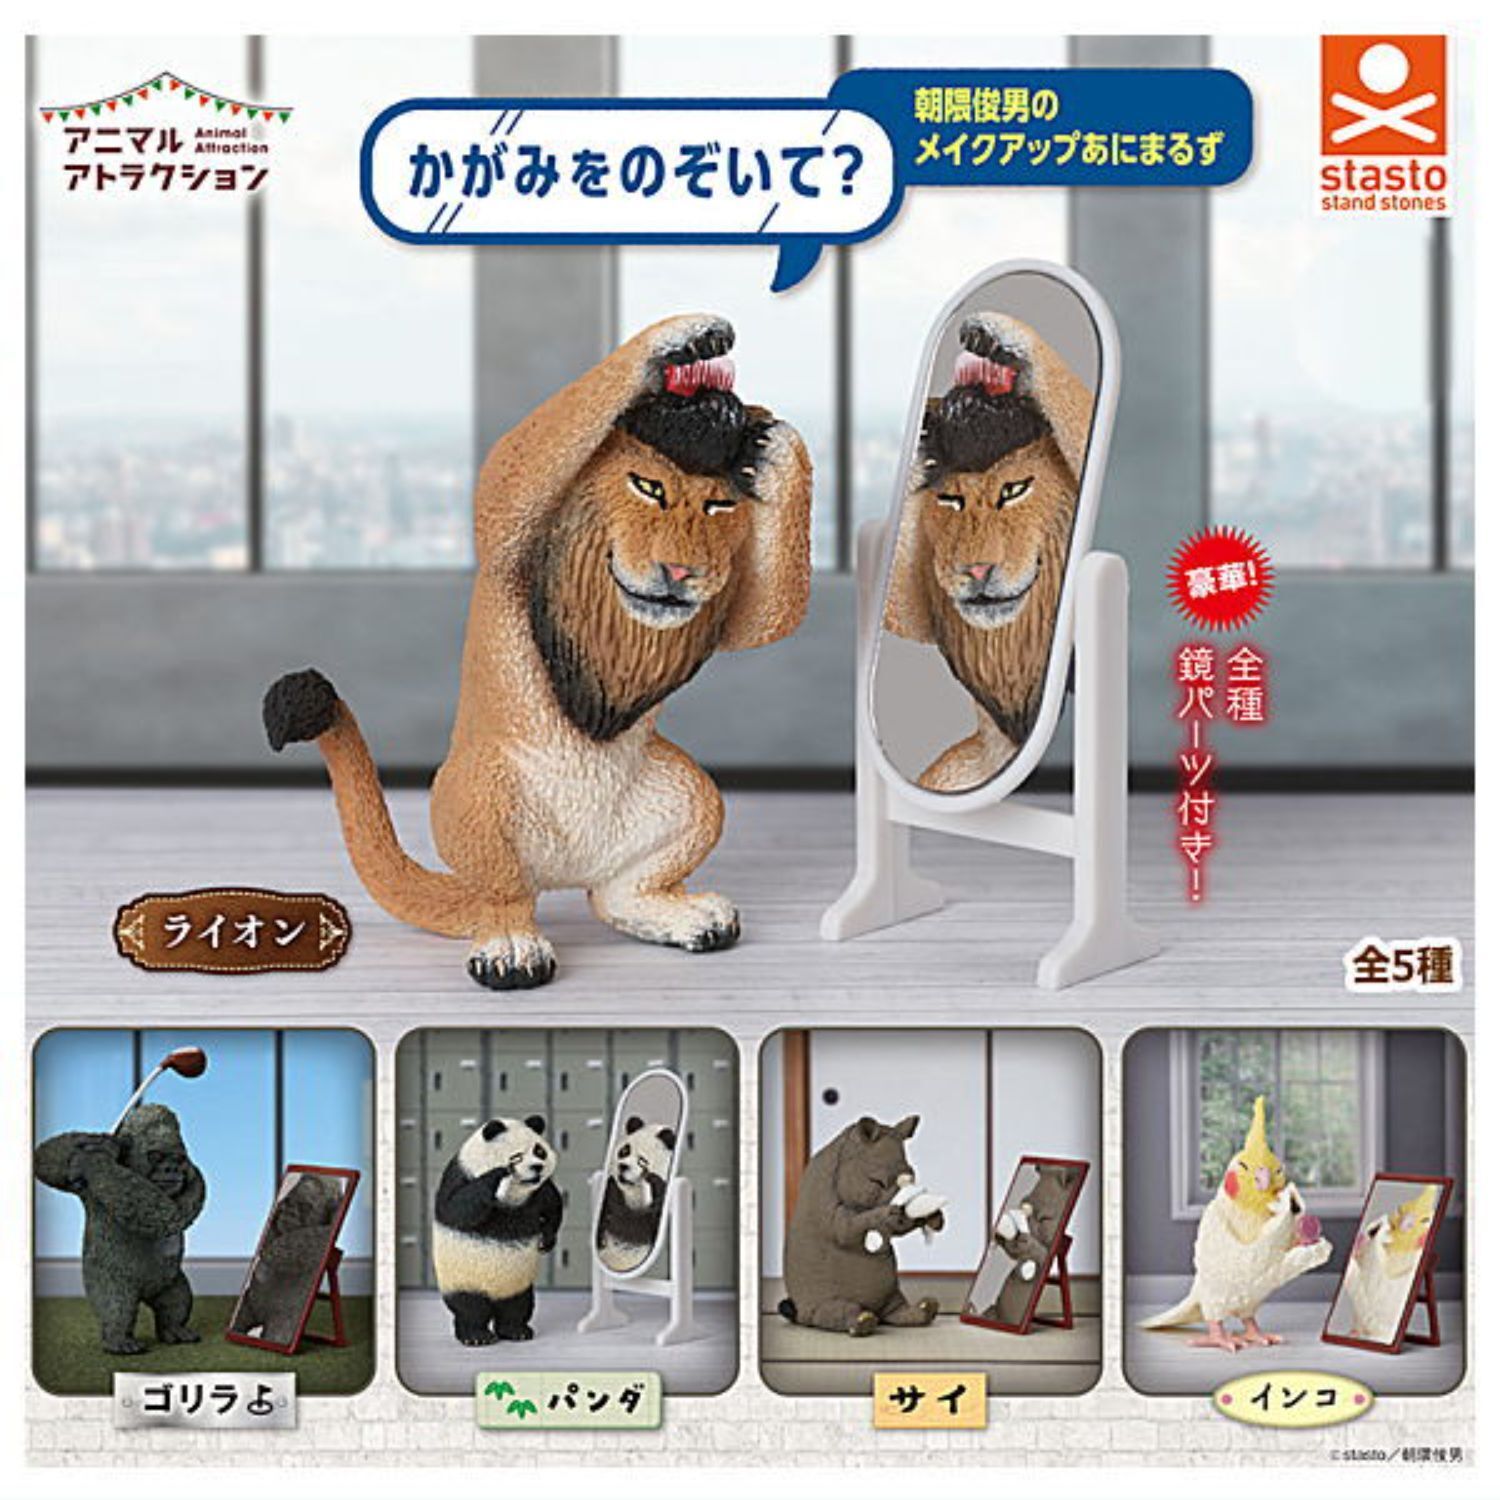 Animal attractions Mascot Figure Capsule Toy 5 Types Full Comp Set Gacha New